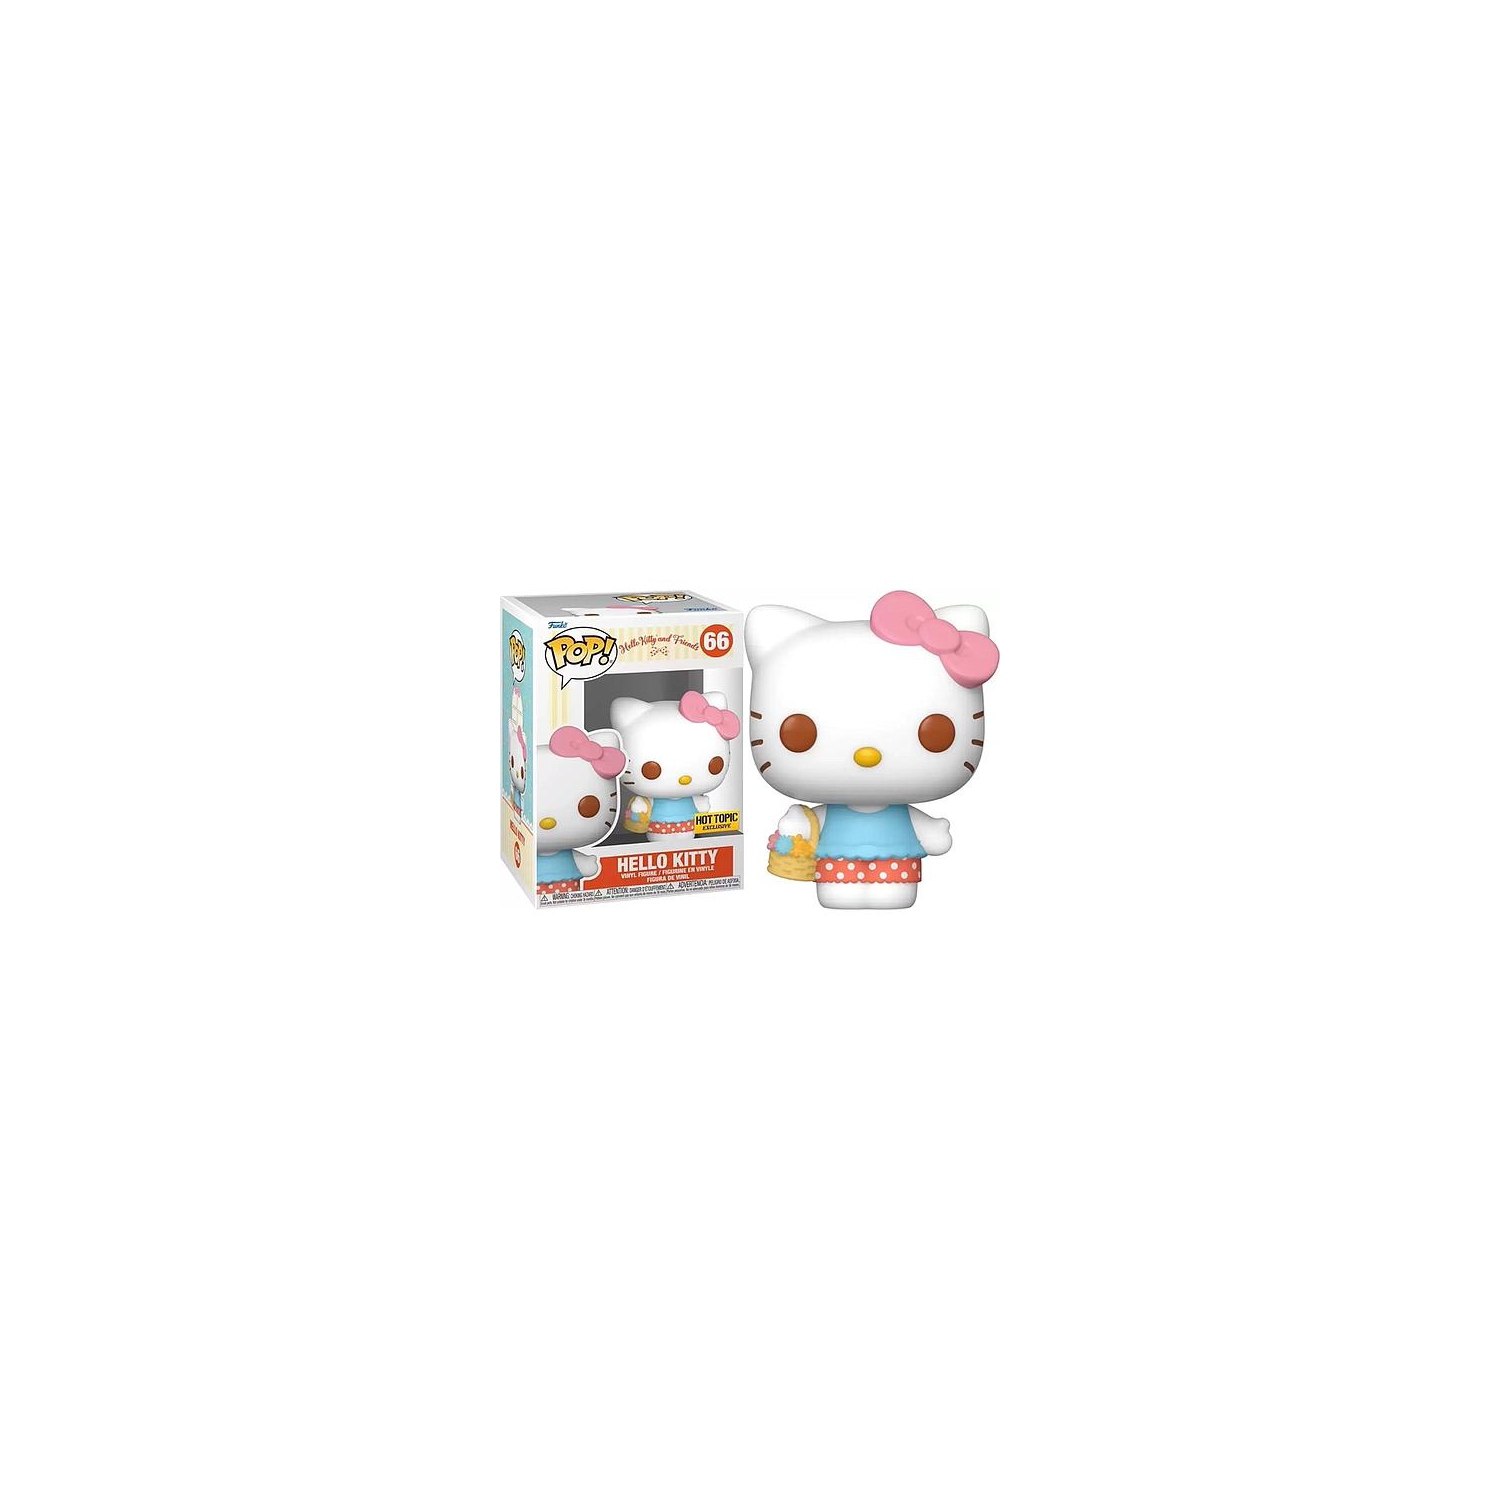 Funko Pop! Sanrio Hello Kitty and Friends Vinyl Figure Hello Kitty #66 Hot Topic Exclusive